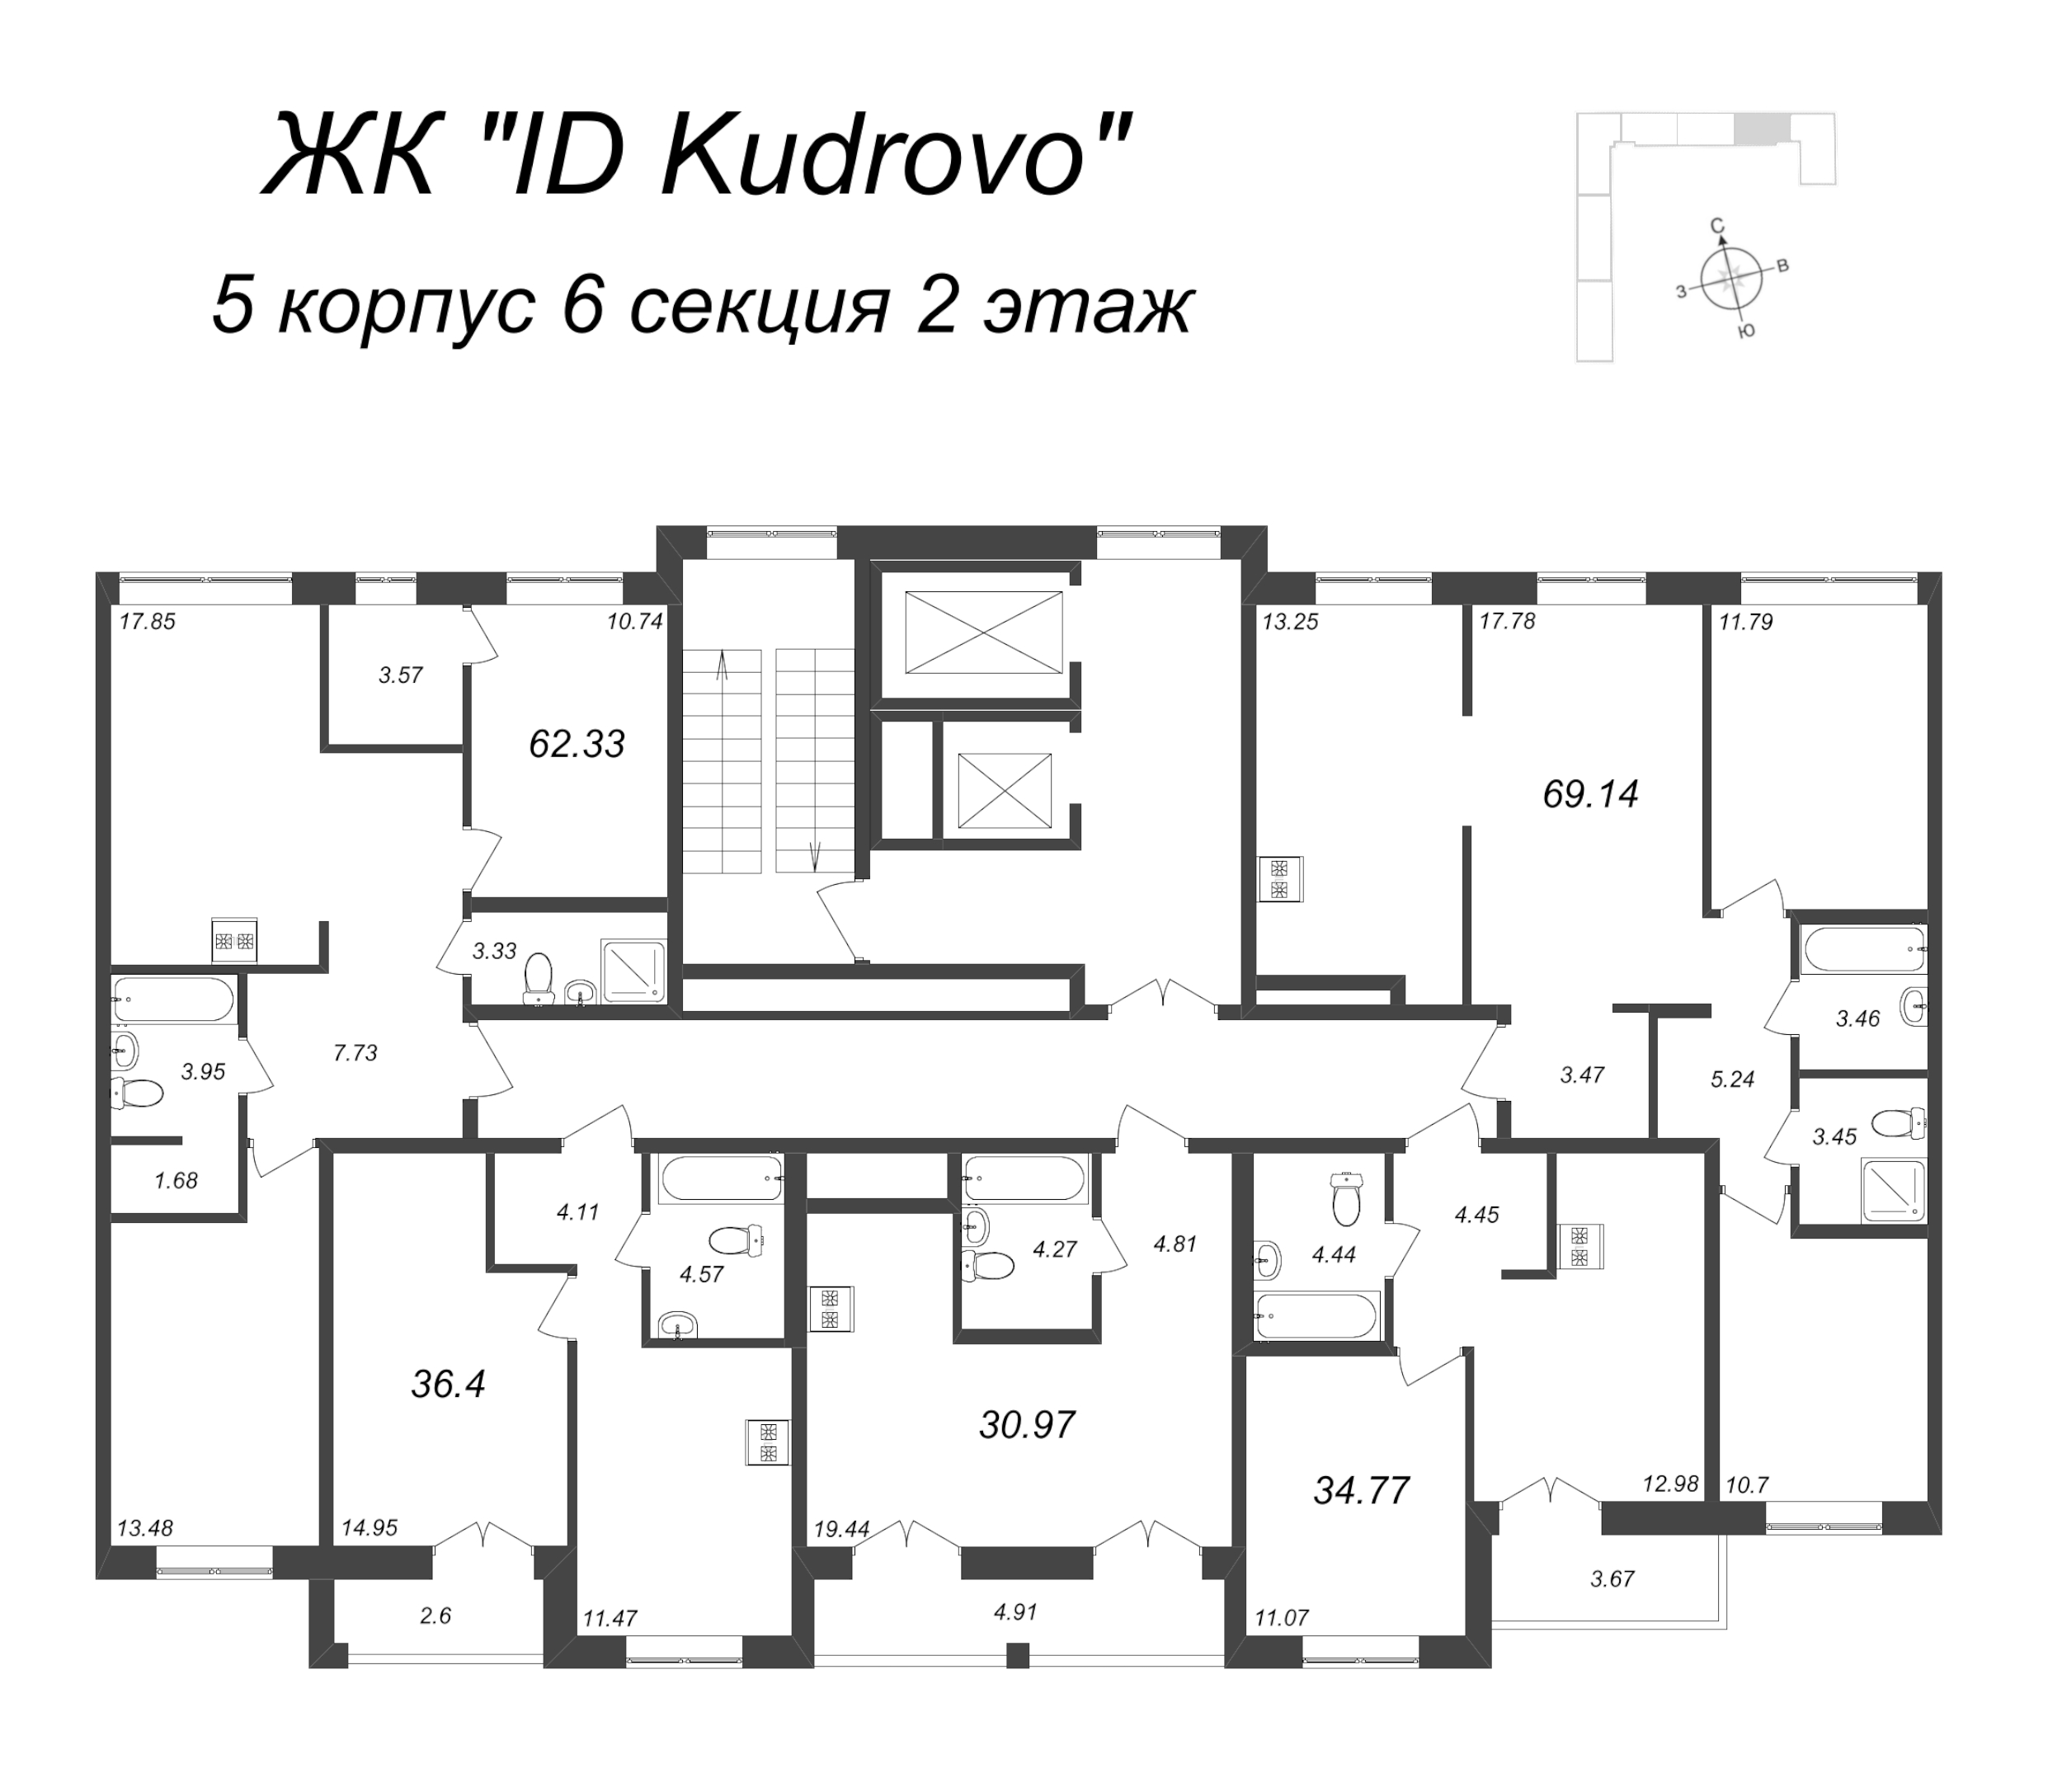 Квартира-студия, 30.97 м² в ЖК "ID Kudrovo" - планировка этажа